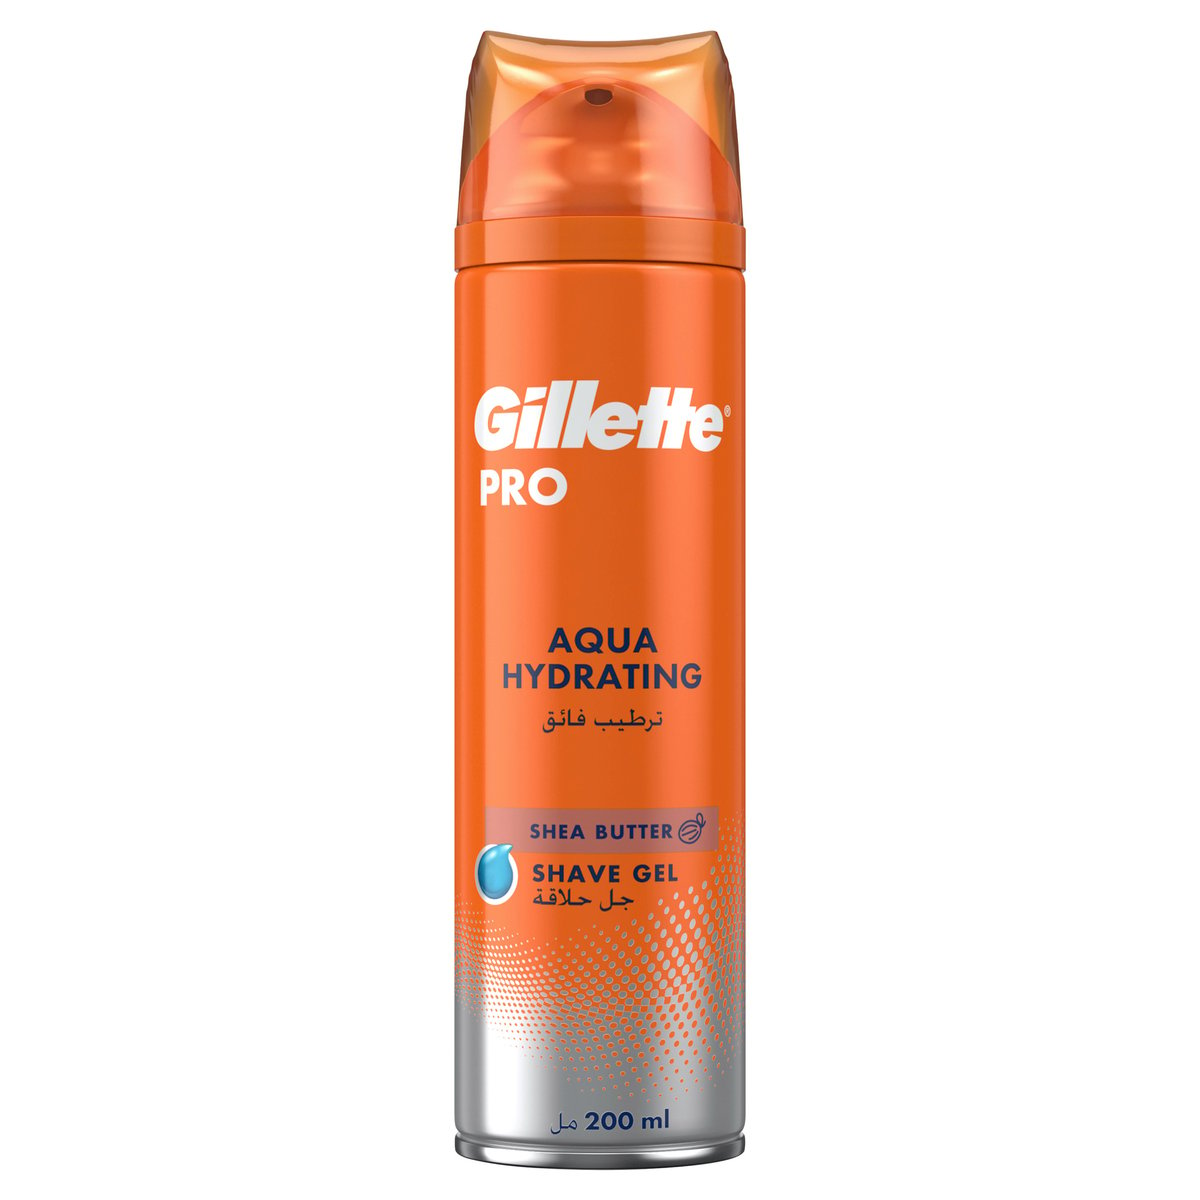 Gillette Pro Shave Gel Aqua Hydrating Shea Butter 200 ml